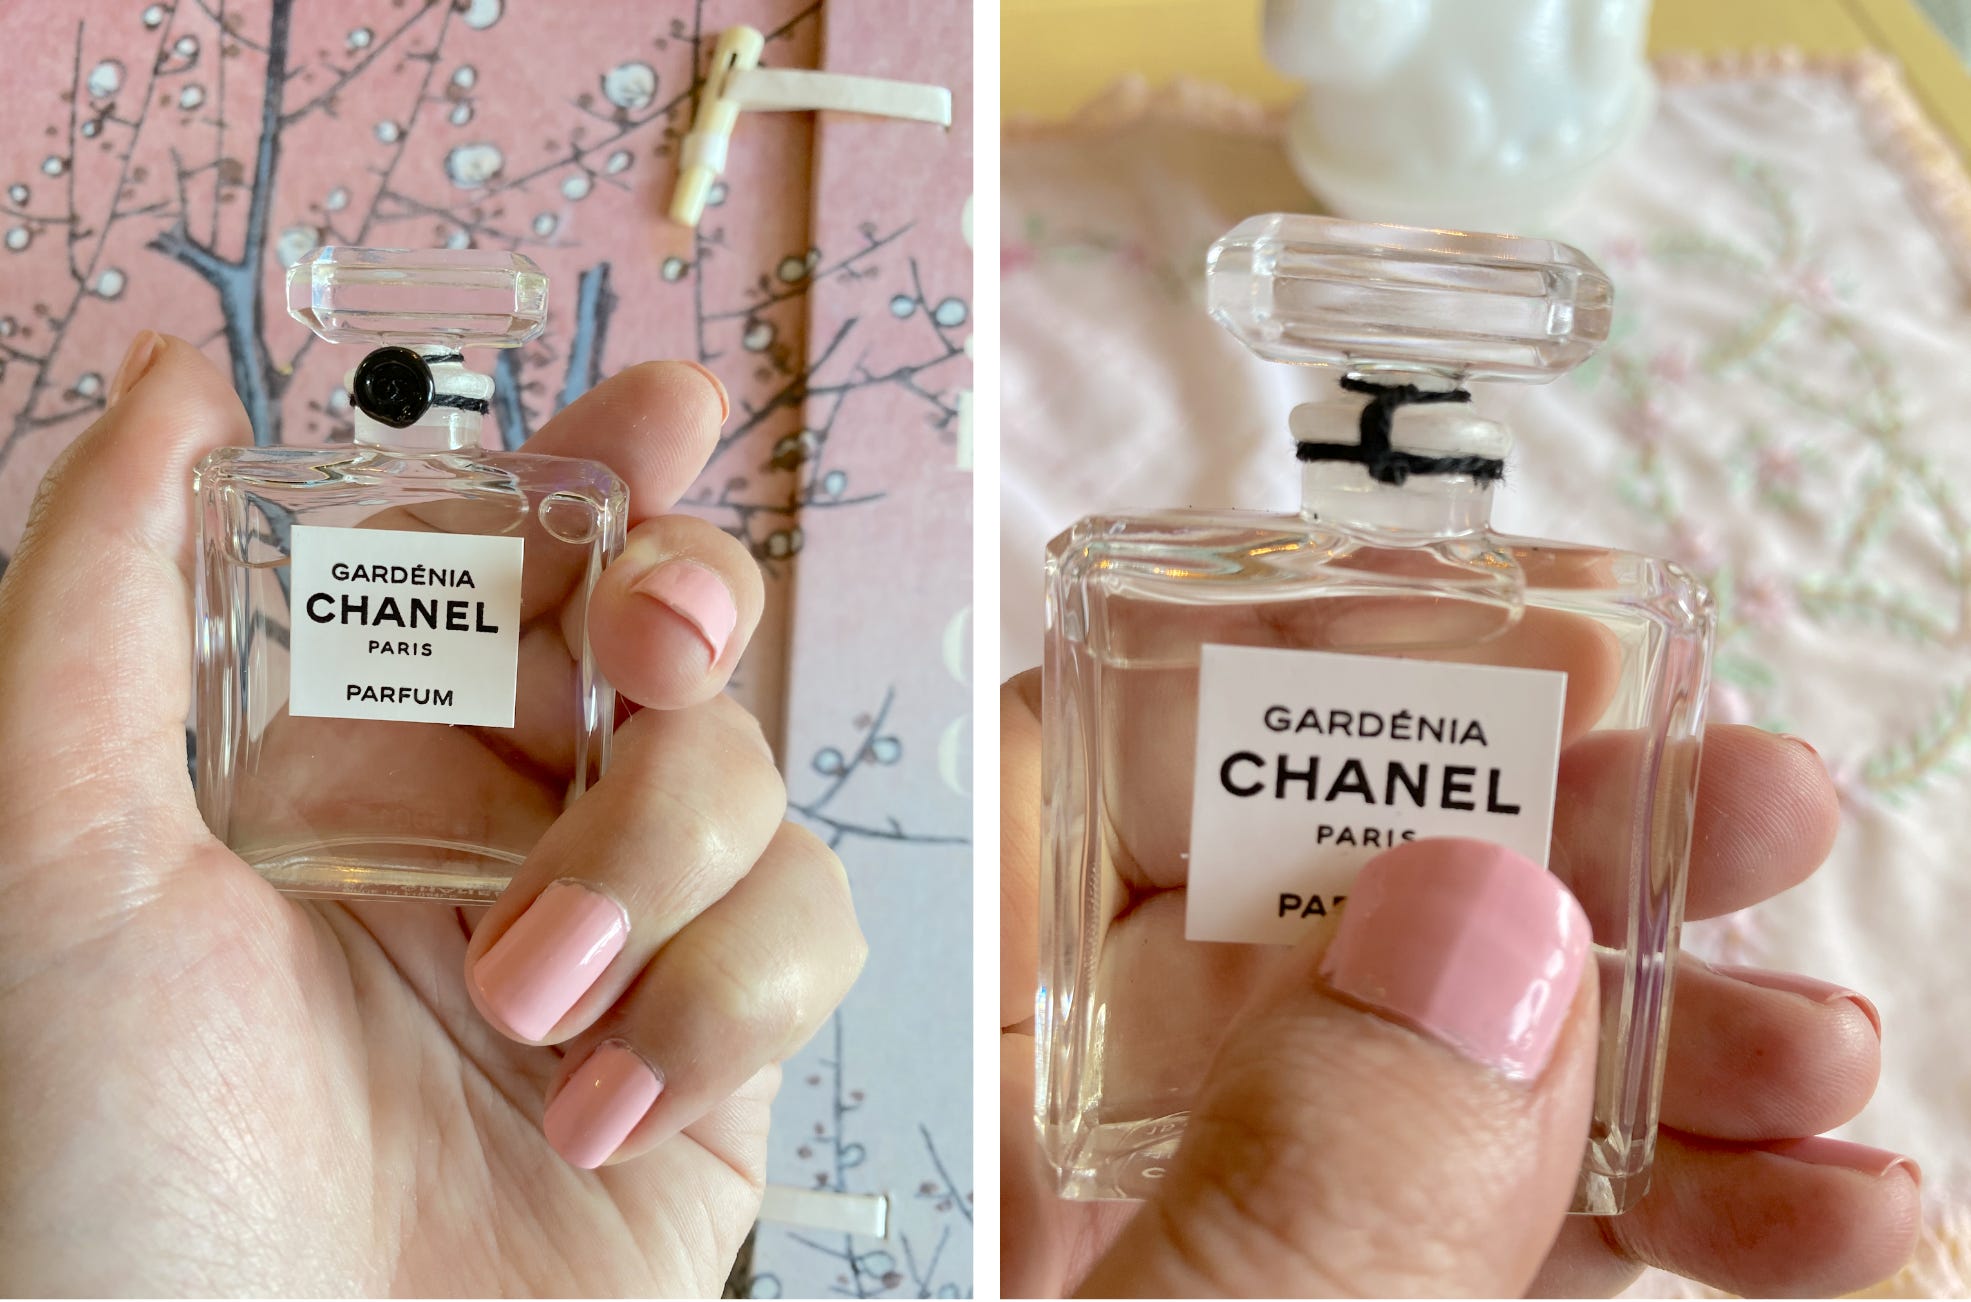 chanel gardenia perfume